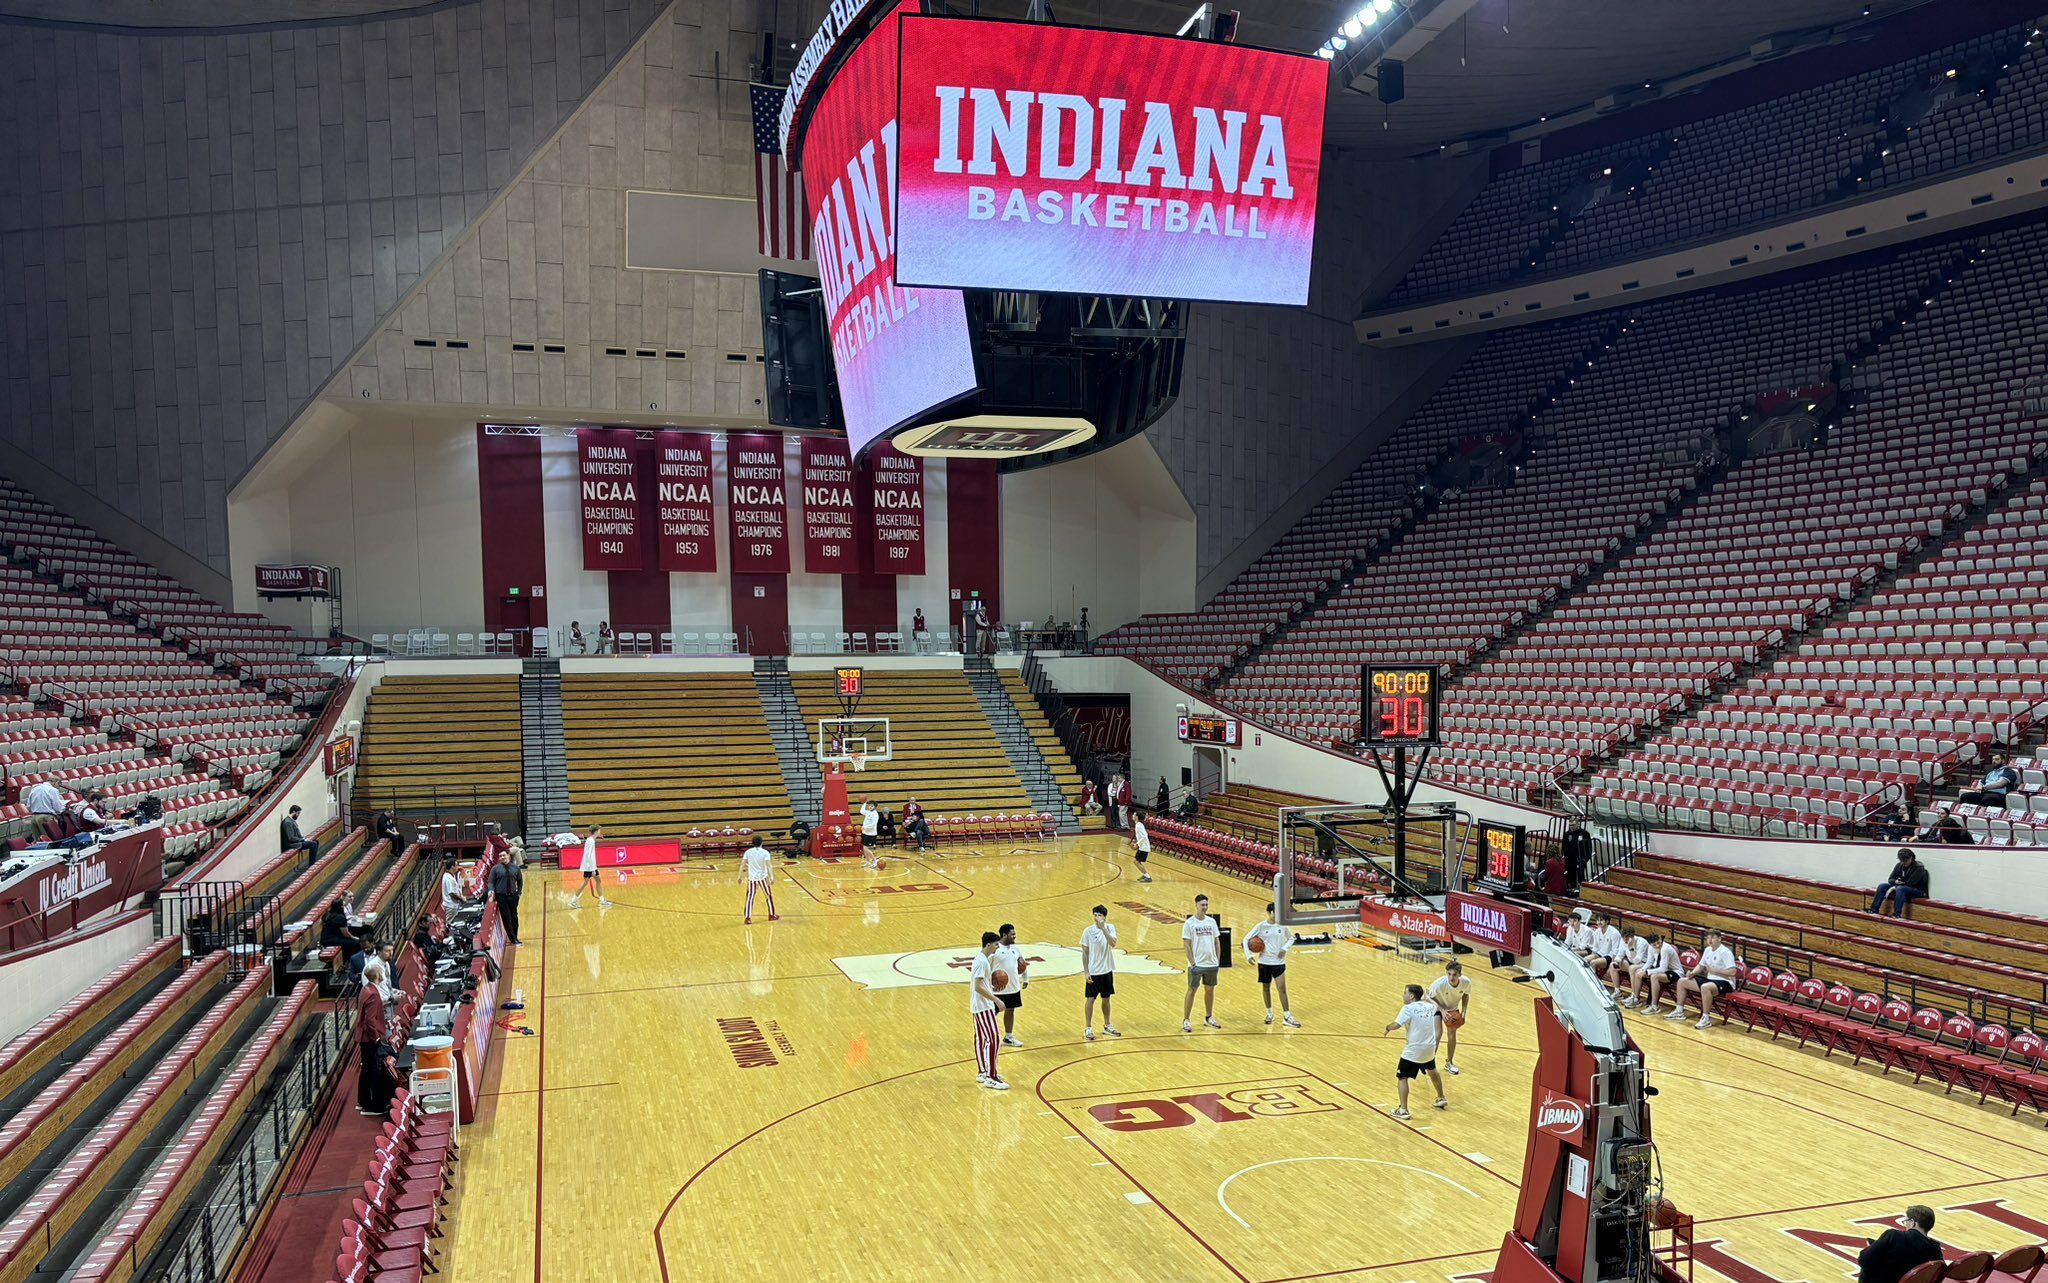 Indiana basketball